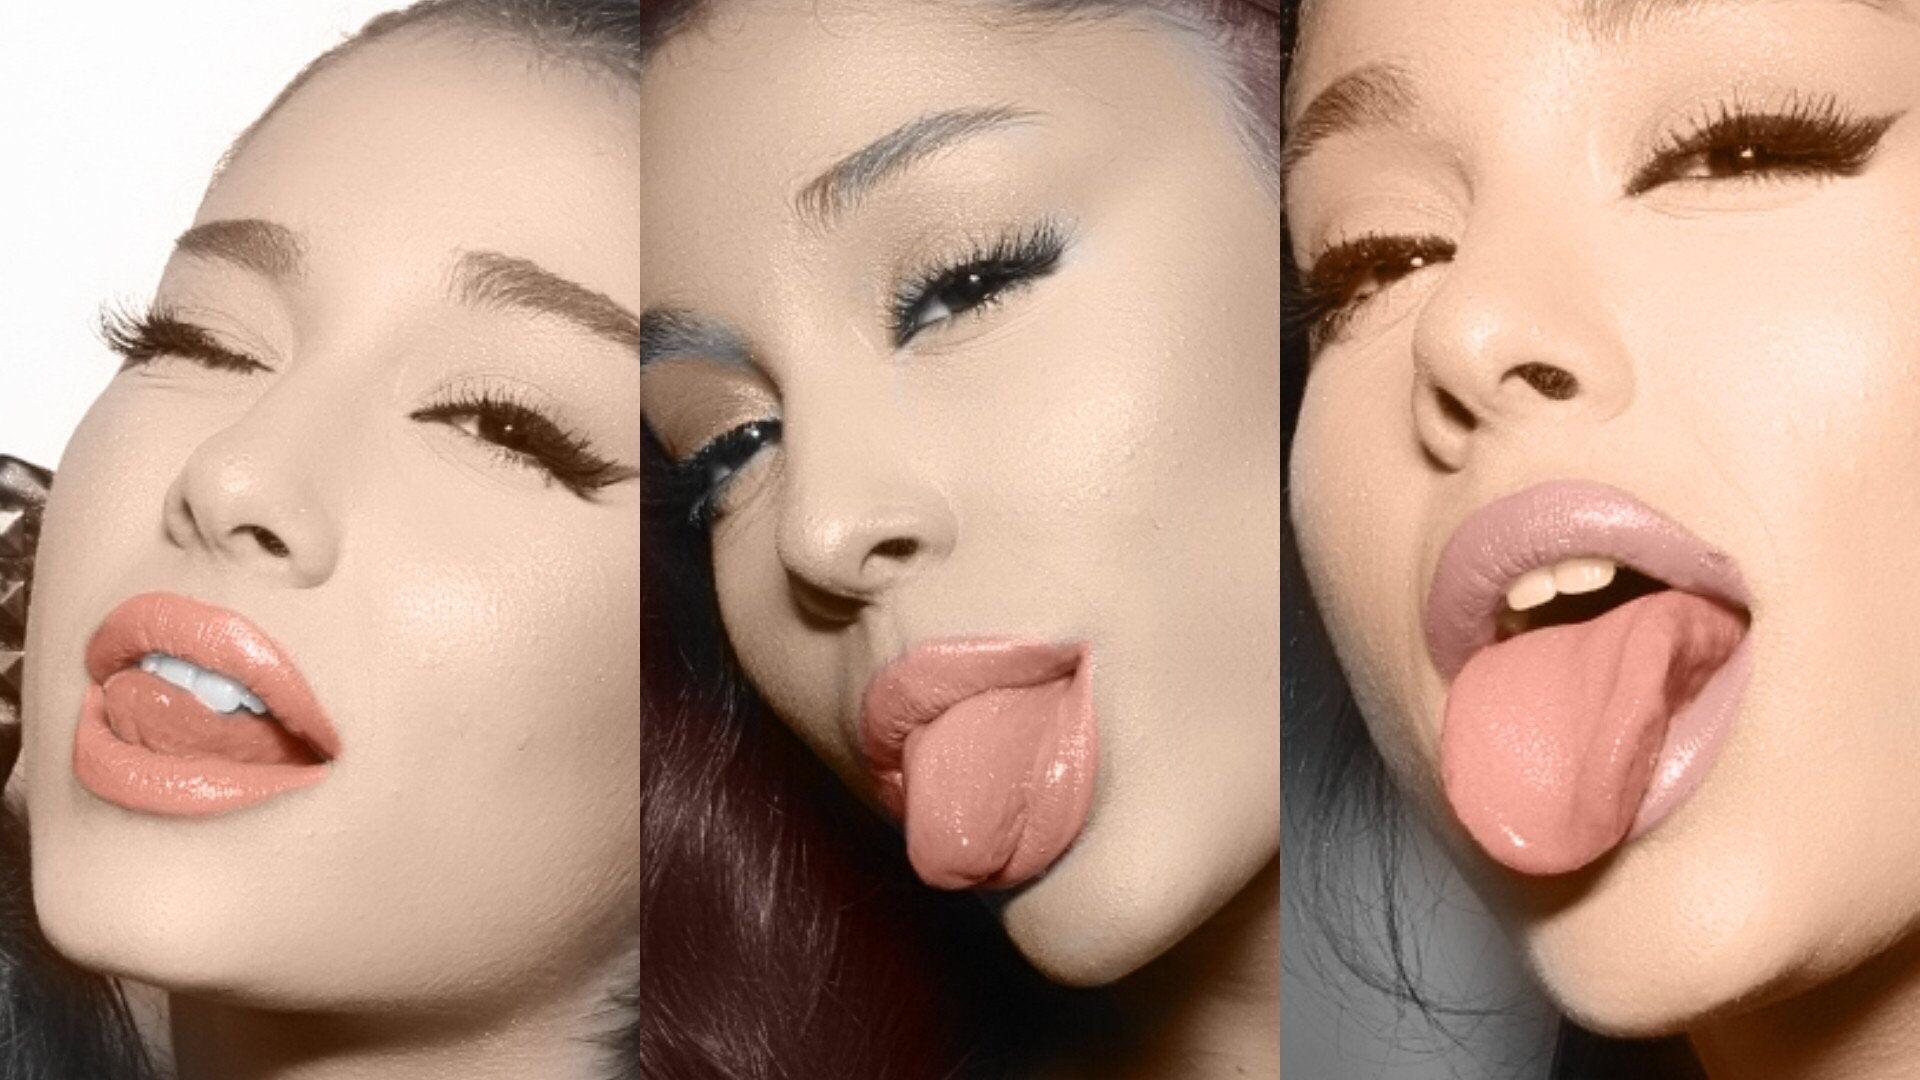 Ariana grande tongue